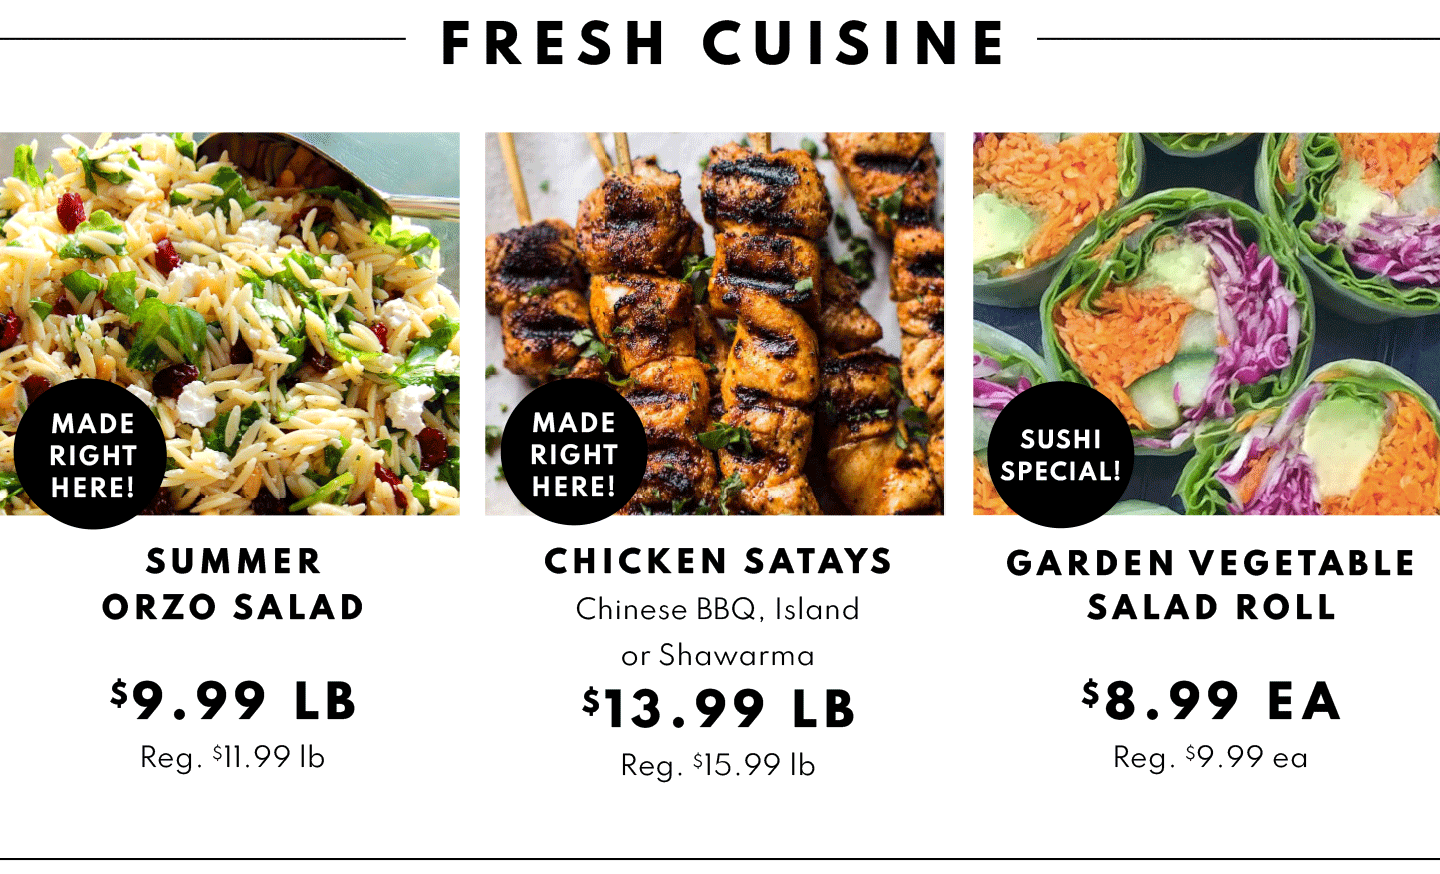 Summer Orzo Salad $9.99 lb, Chicken Satays $13.99 lb, Garden Vegetable Salad Roll $8.99 ea